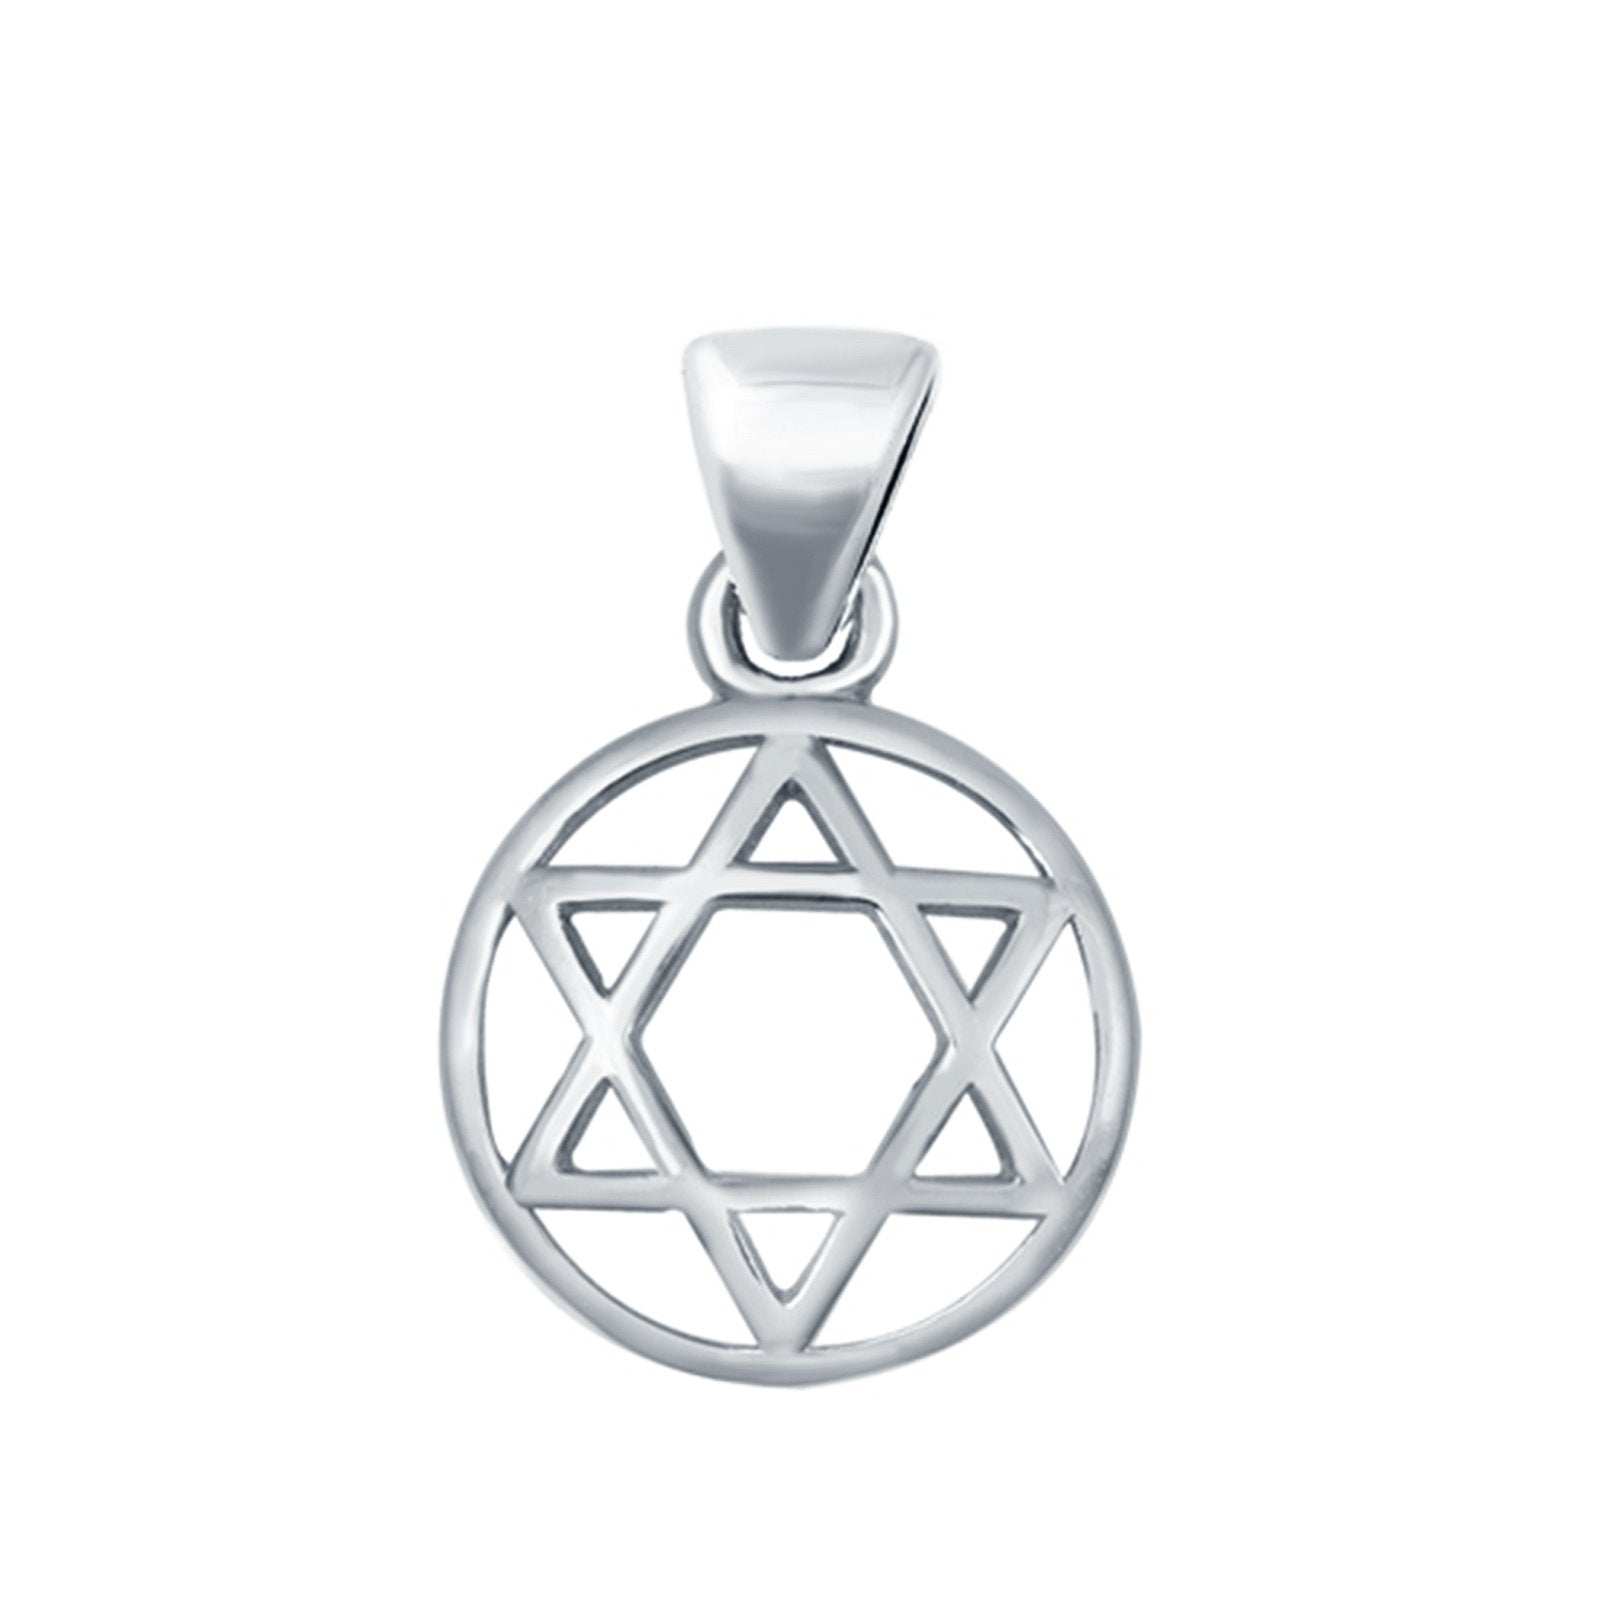 Jewish Star Charm Pendant Fashion Jewelry Round 925 Sterling Silver